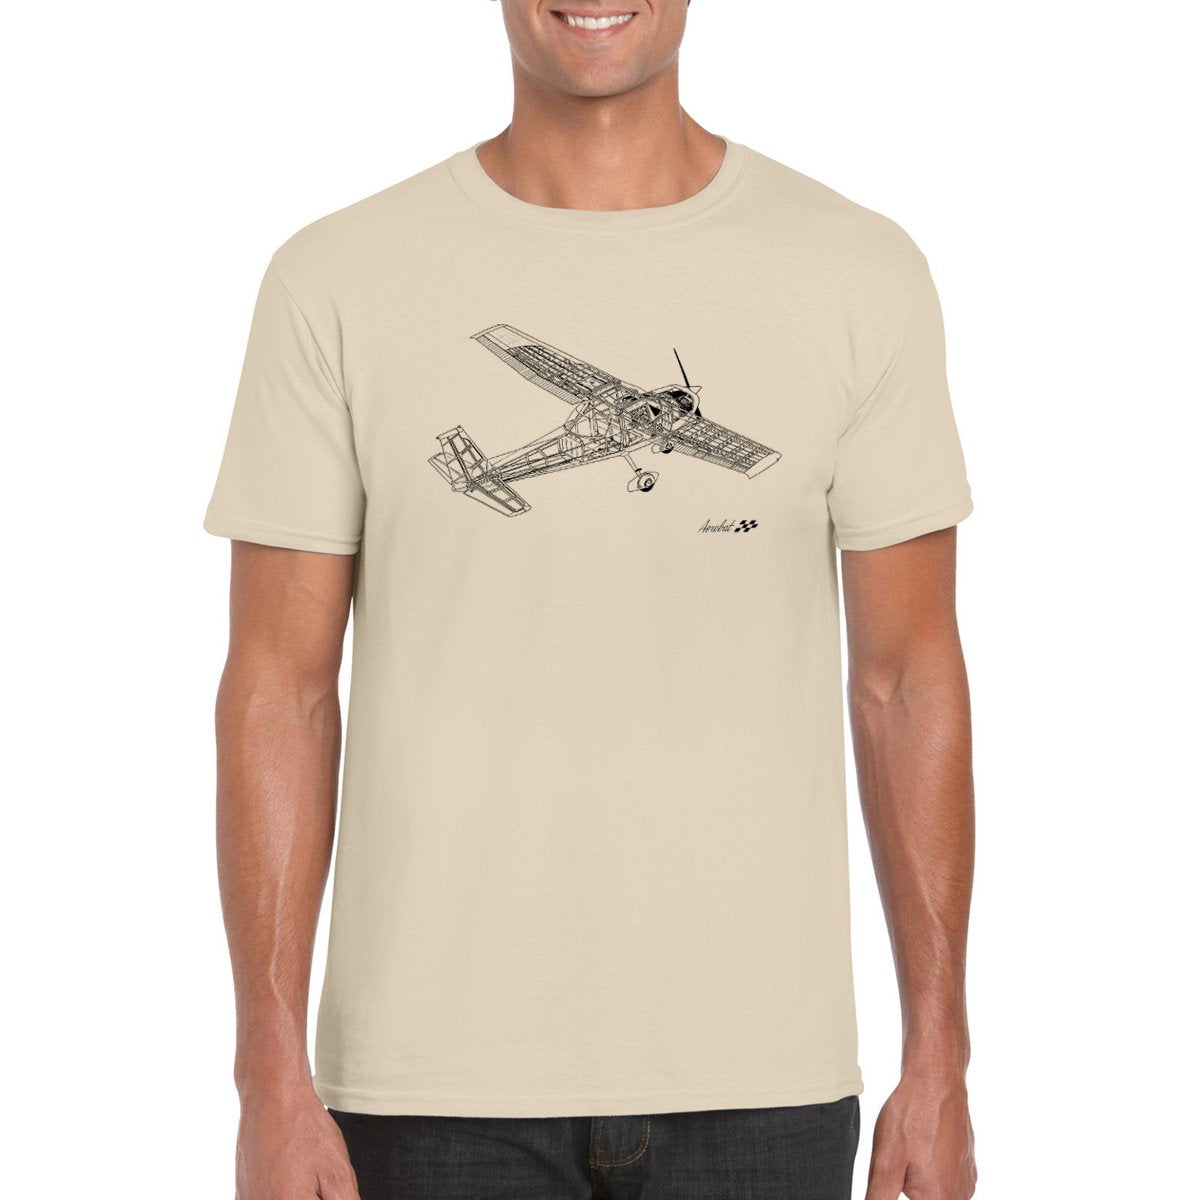 AEROBAT CUTAWAY Unisex Semi-Fitted T-Shirt